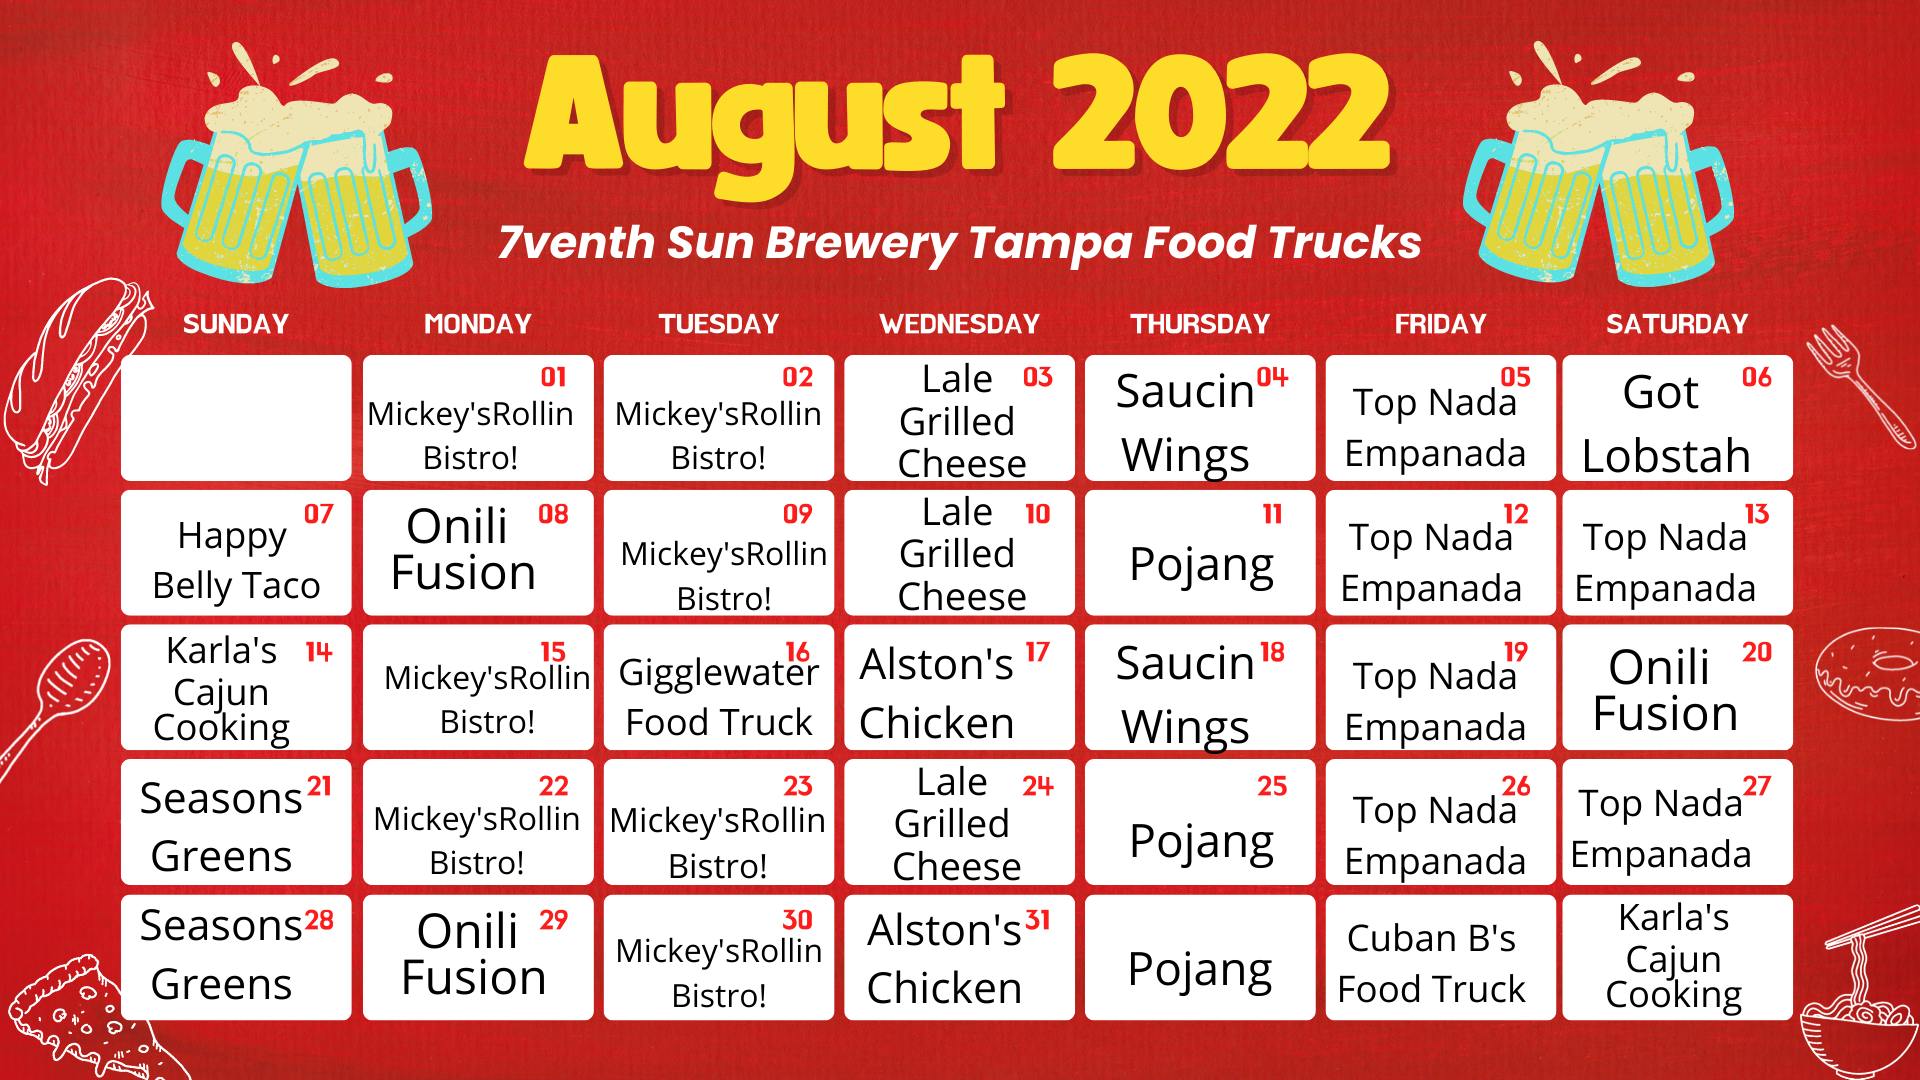 7venth Sun Tampa August Food Trucks